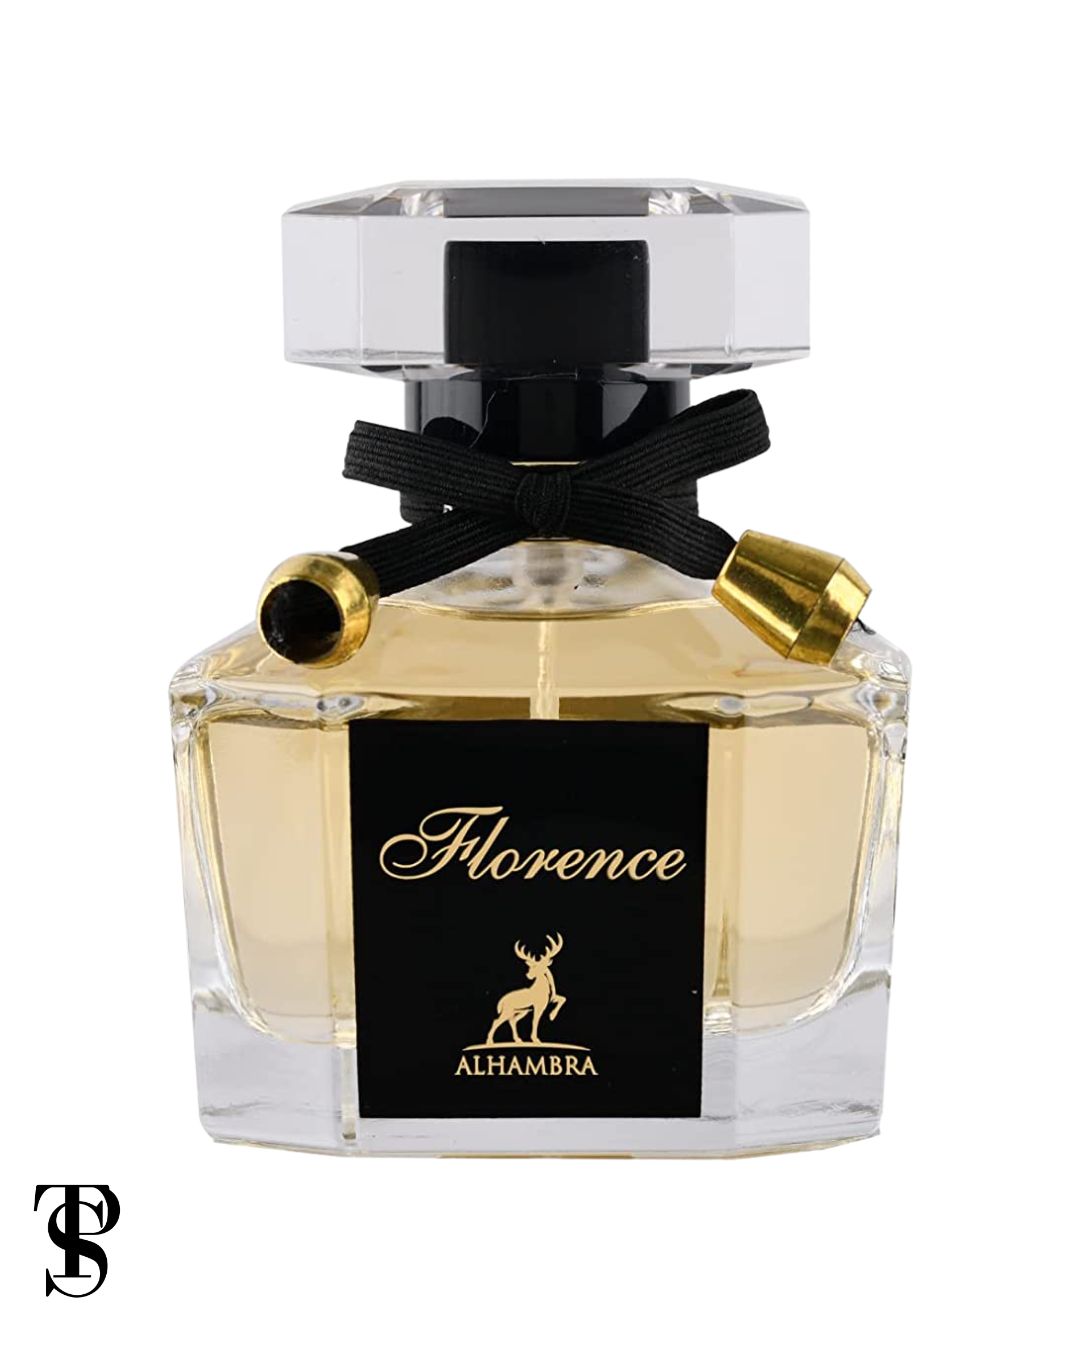 Al Hambra - Florence ( 100 ml )